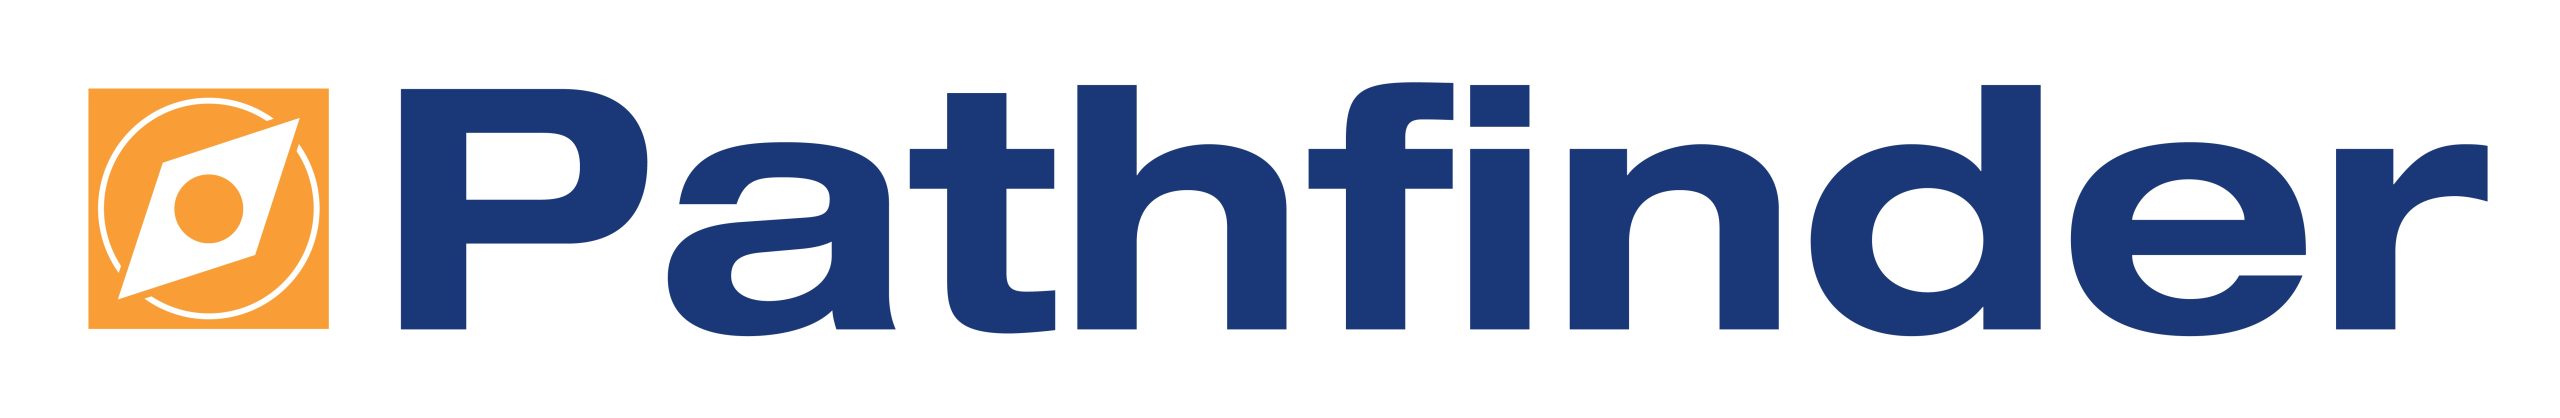 Pathfinder logo - blue text with orange compass icon